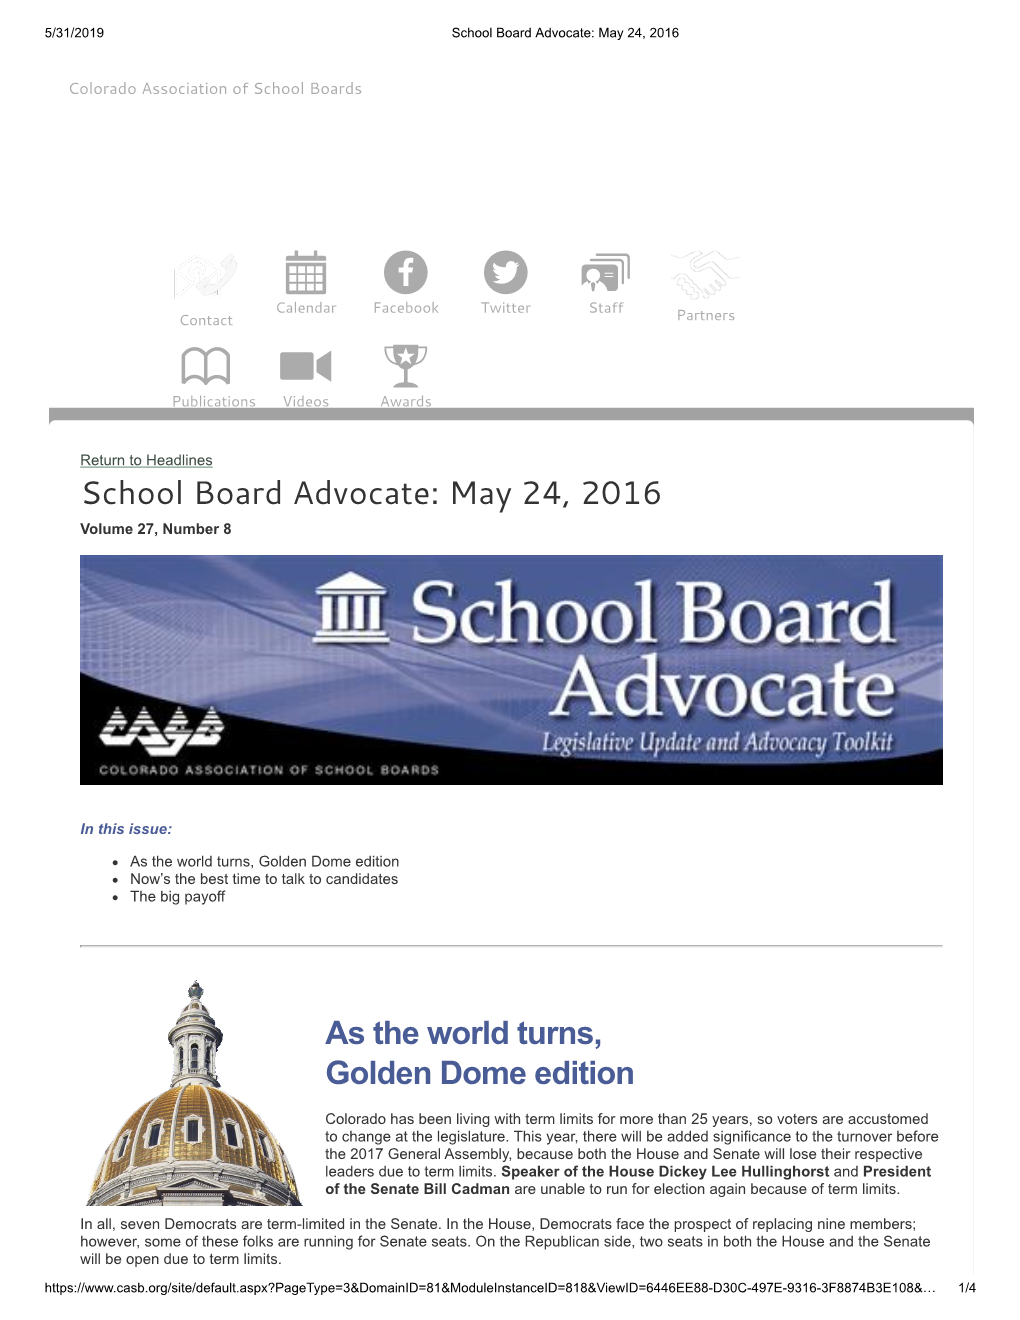 School Board Advocate: May 24, 2016